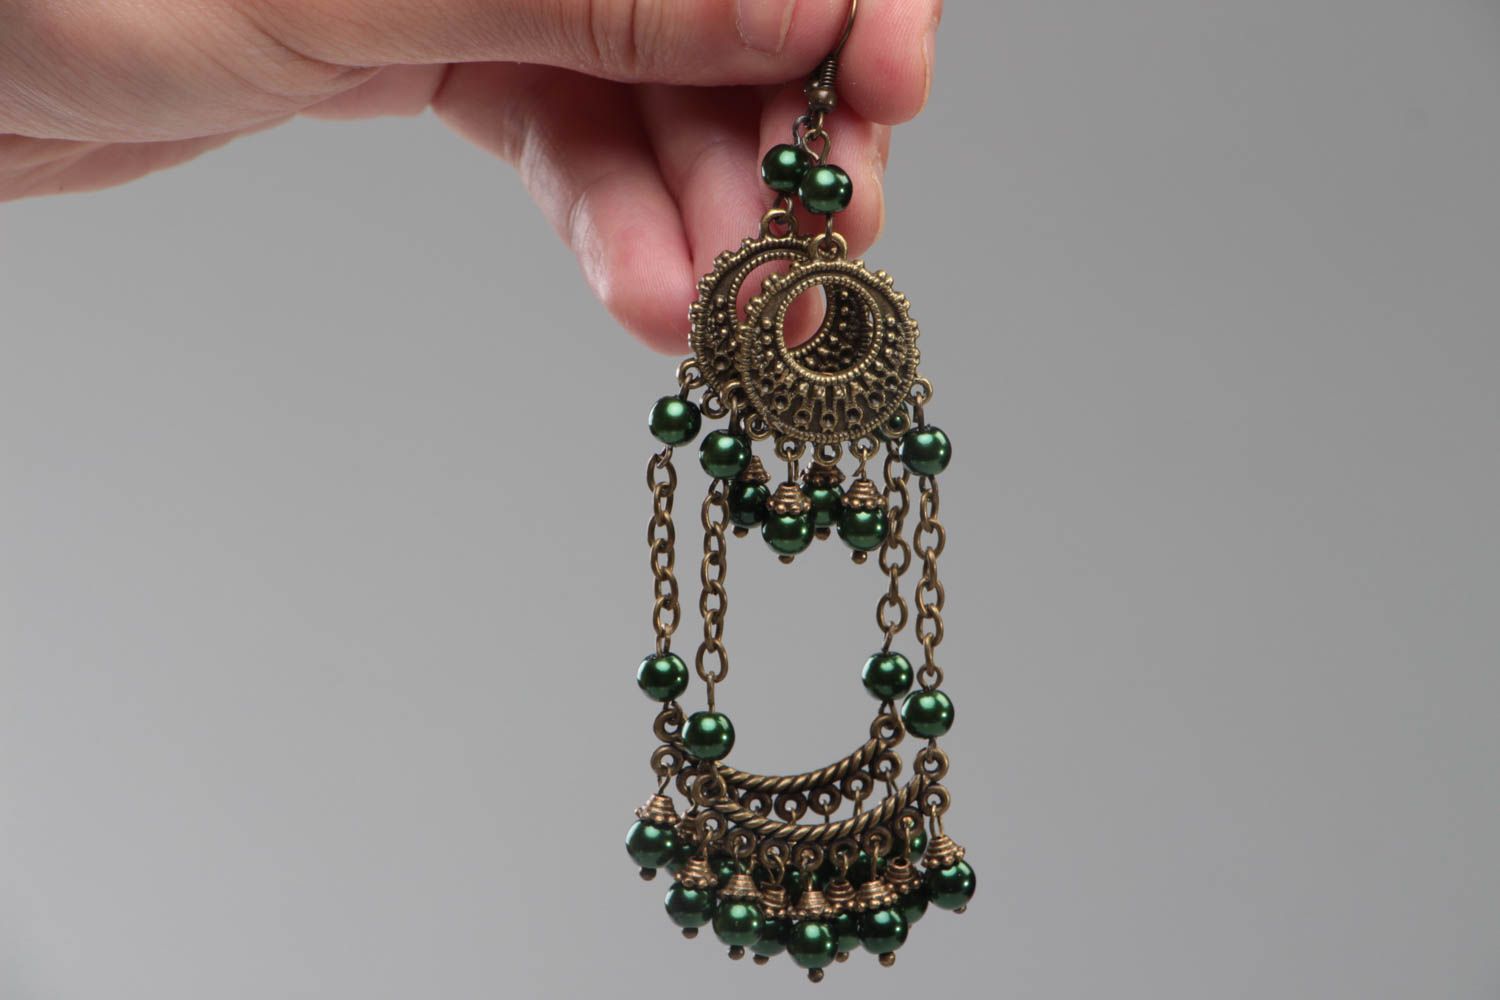 Handmade earrings with charms unusual stylish accessories beautiful jewelry photo 5